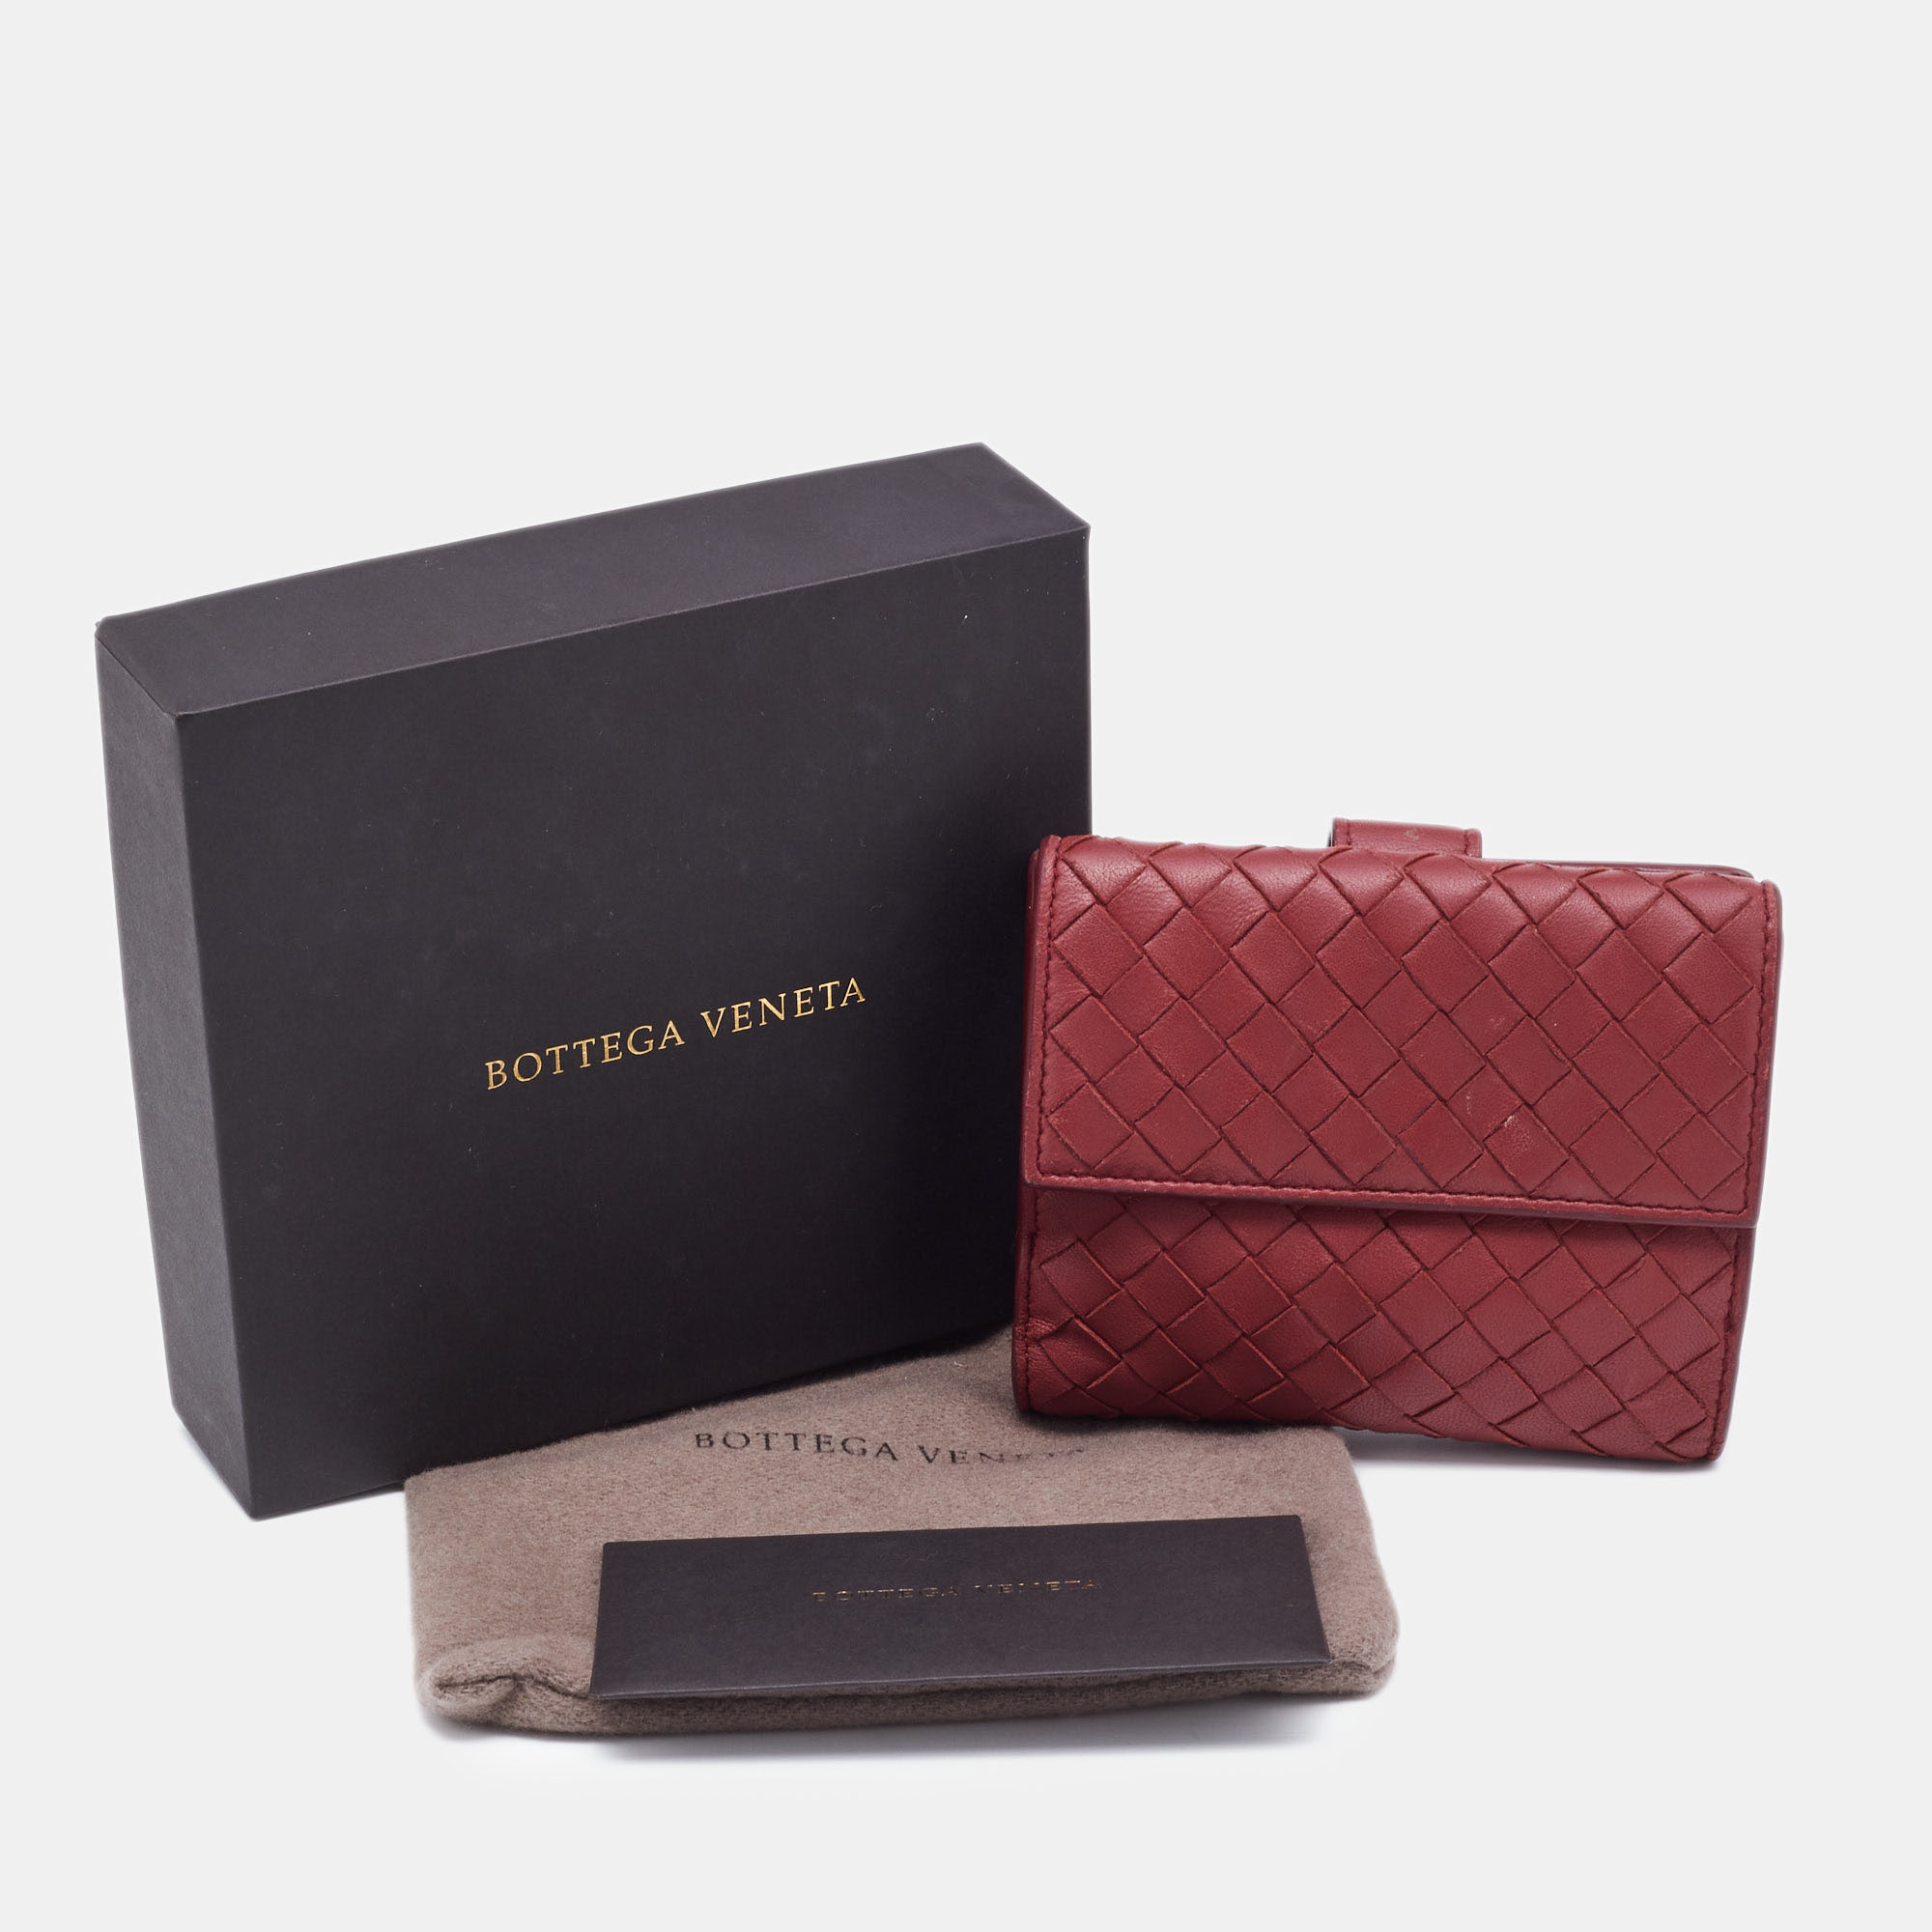 Bottega Veneta Reddish Brown Intrecciato Leather French Compact Wallet